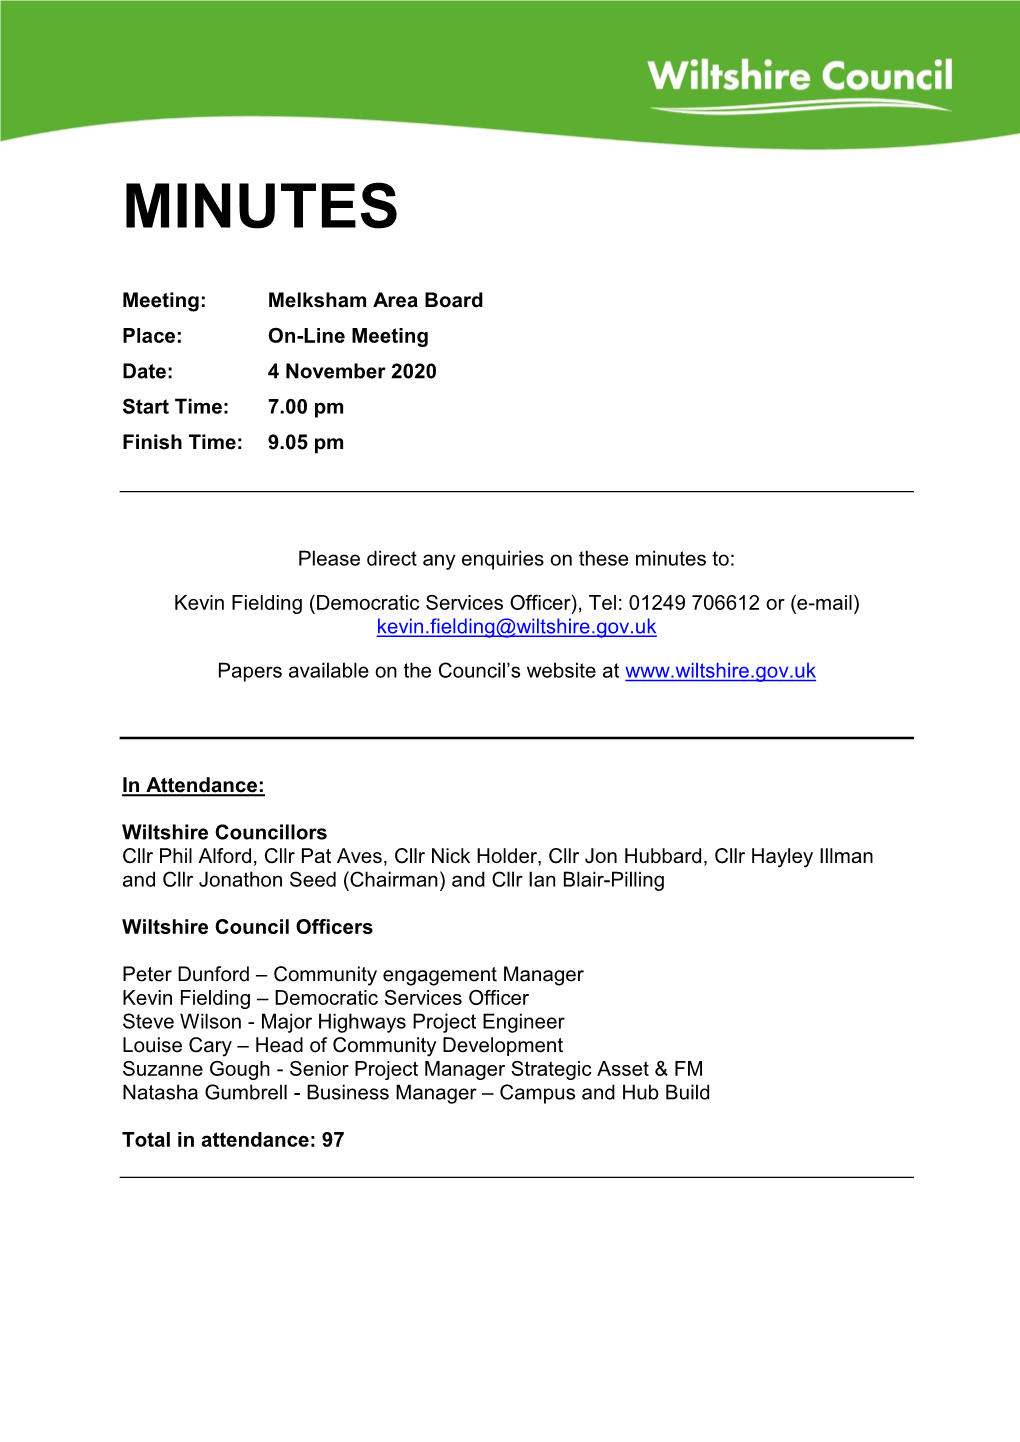 Minutes Document for Melksham Area Board, 04/11